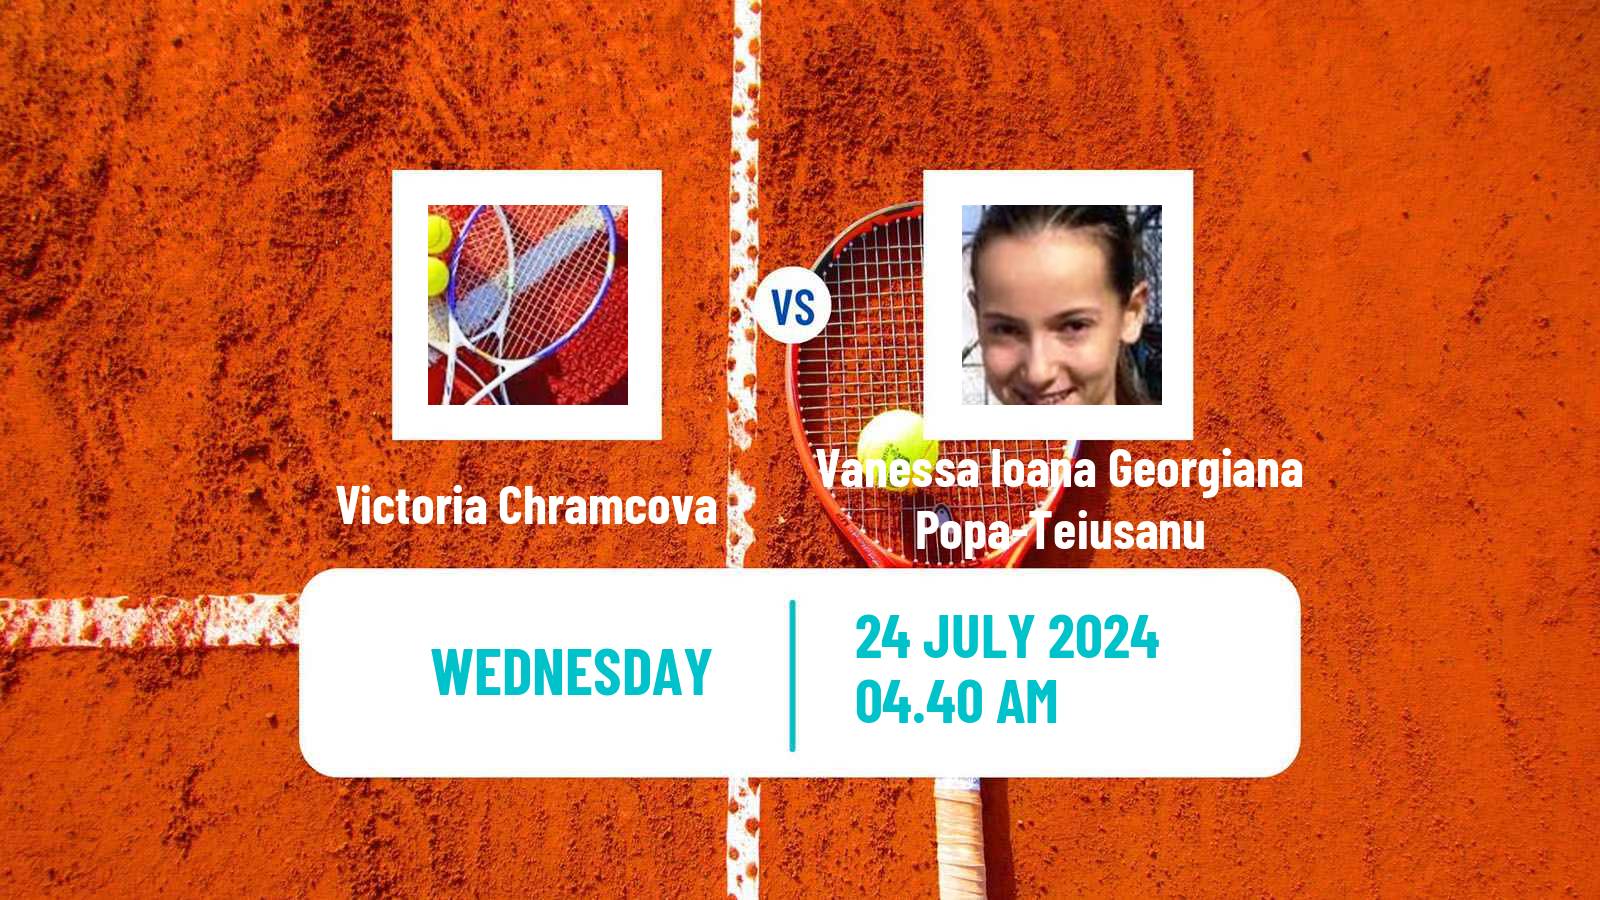 Tennis ITF W15 Satu Mare Women Victoria Chramcova - Vanessa Ioana Georgiana Popa-Teiusanu